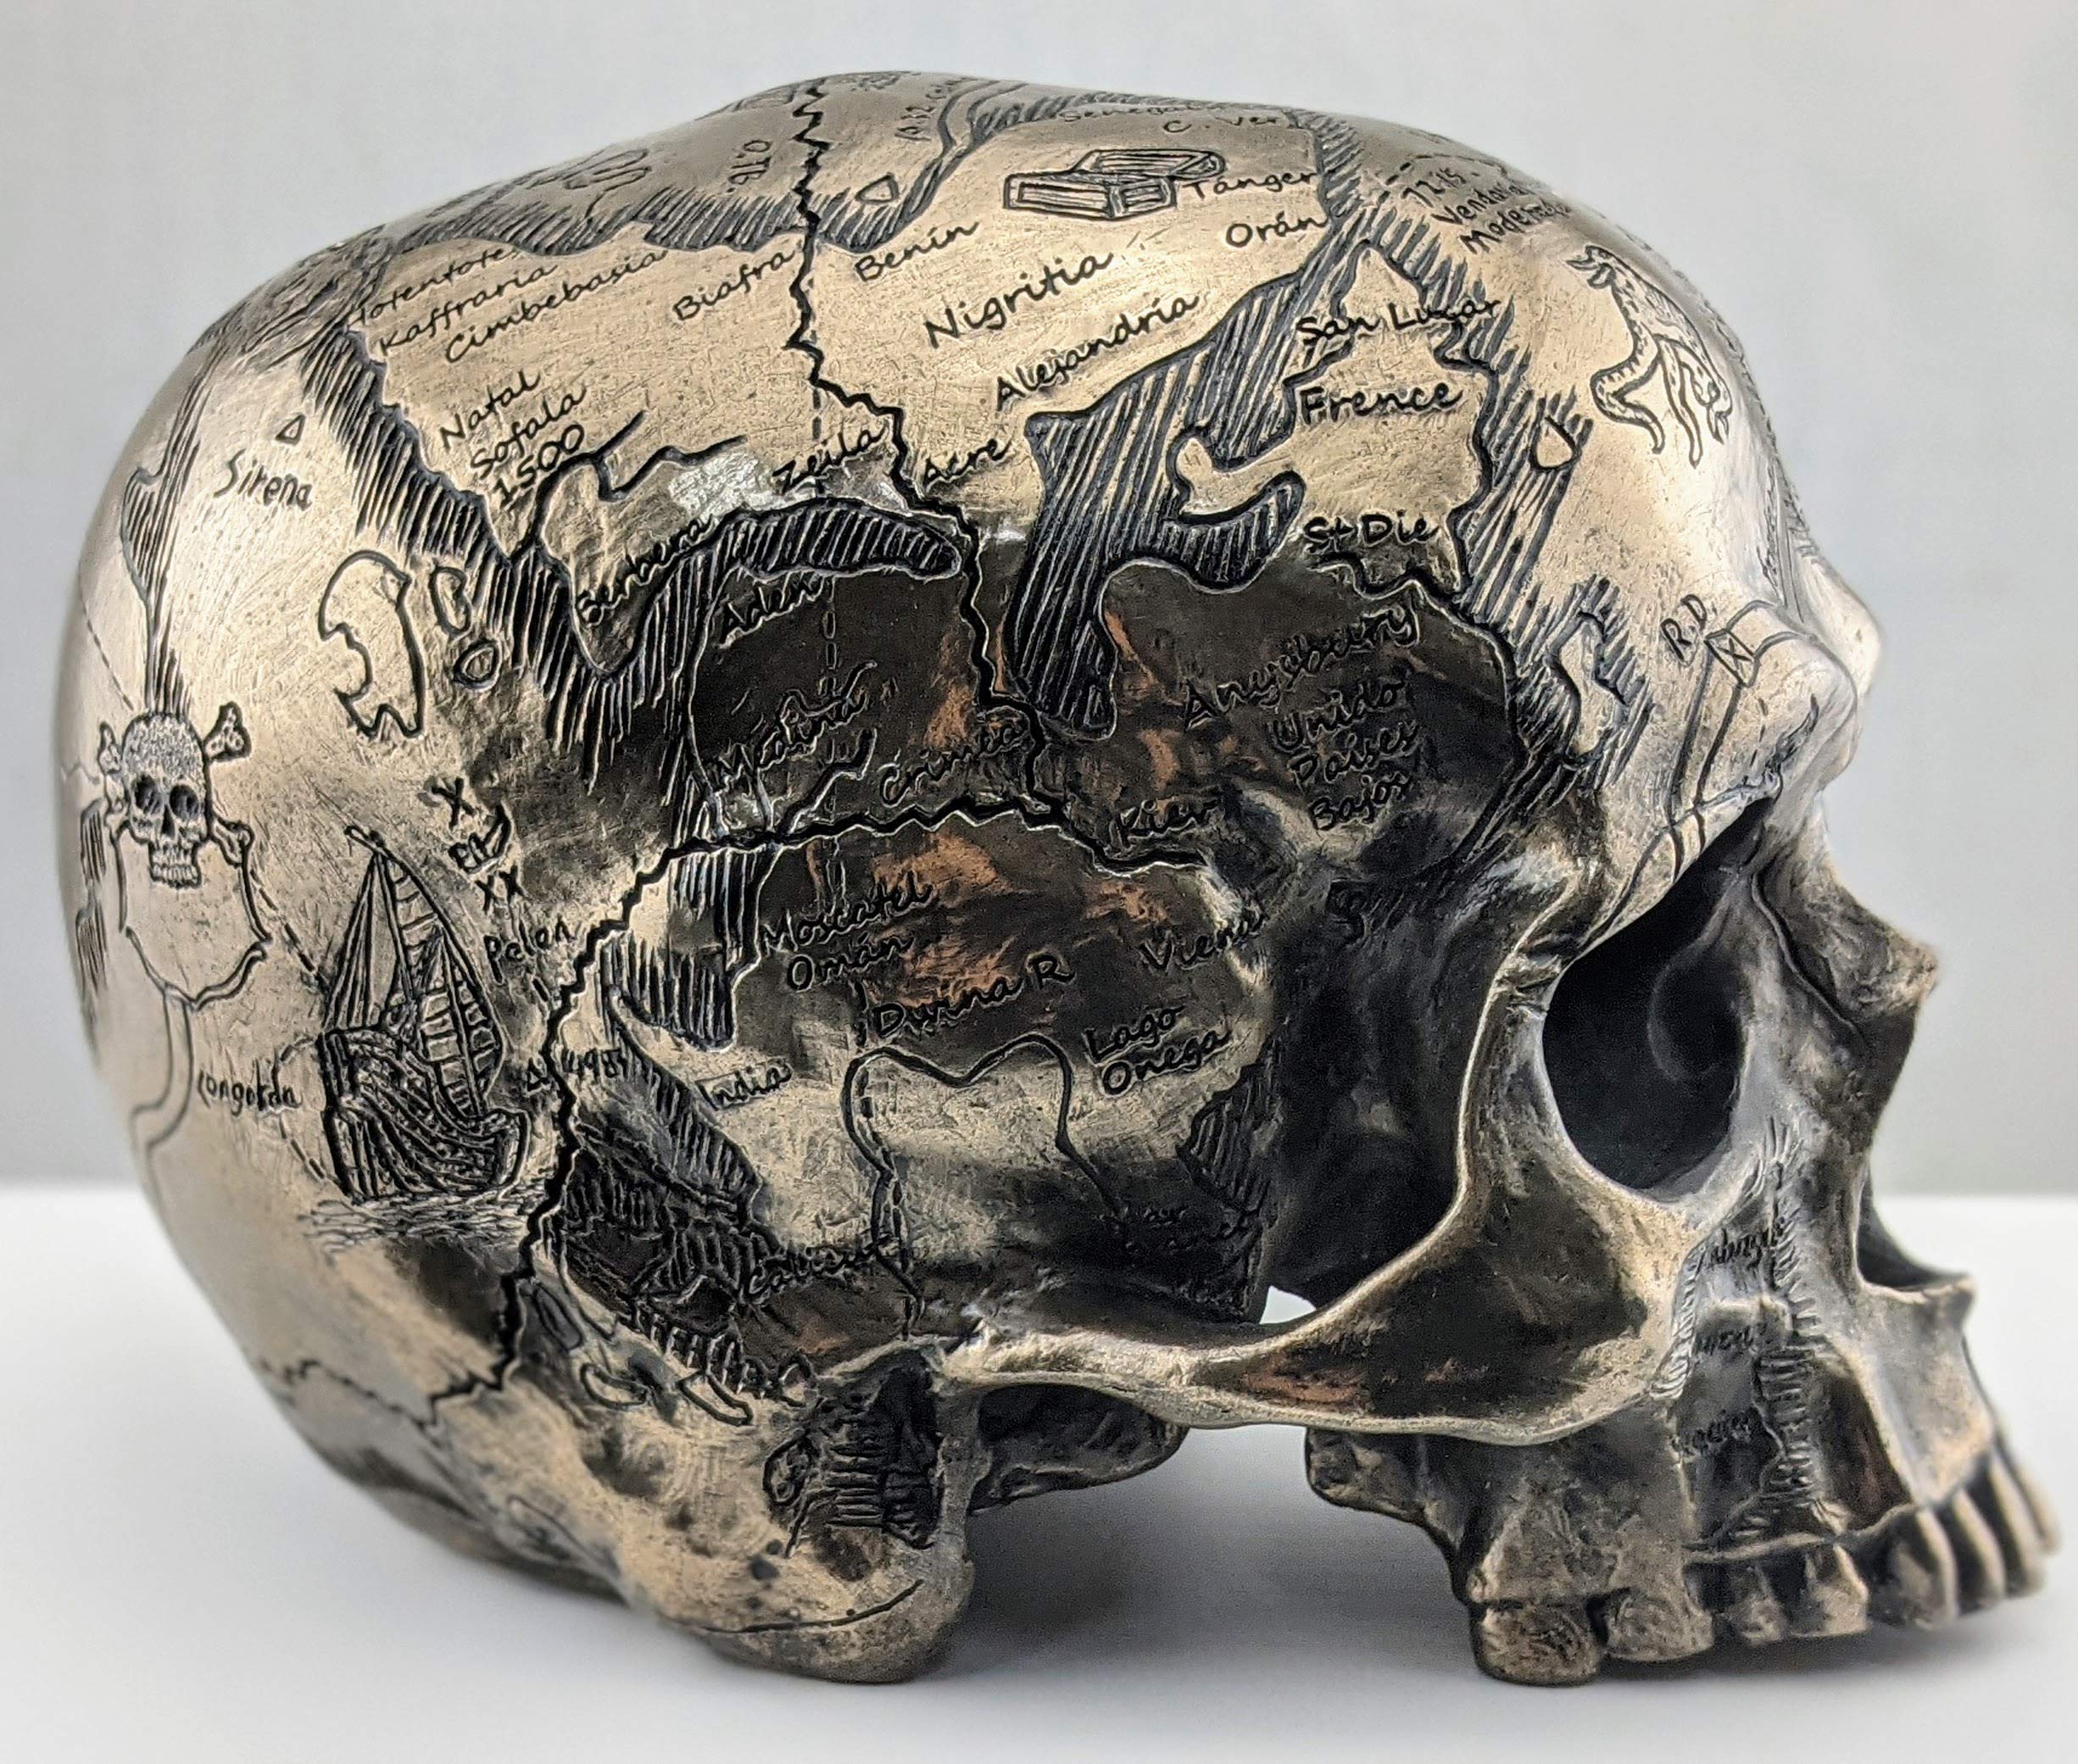 Veronese Design 5 3/8 Inch Craniumography Old Treasure Map Skull Sculpture Cold Cast Resin Bronze Finish Statue